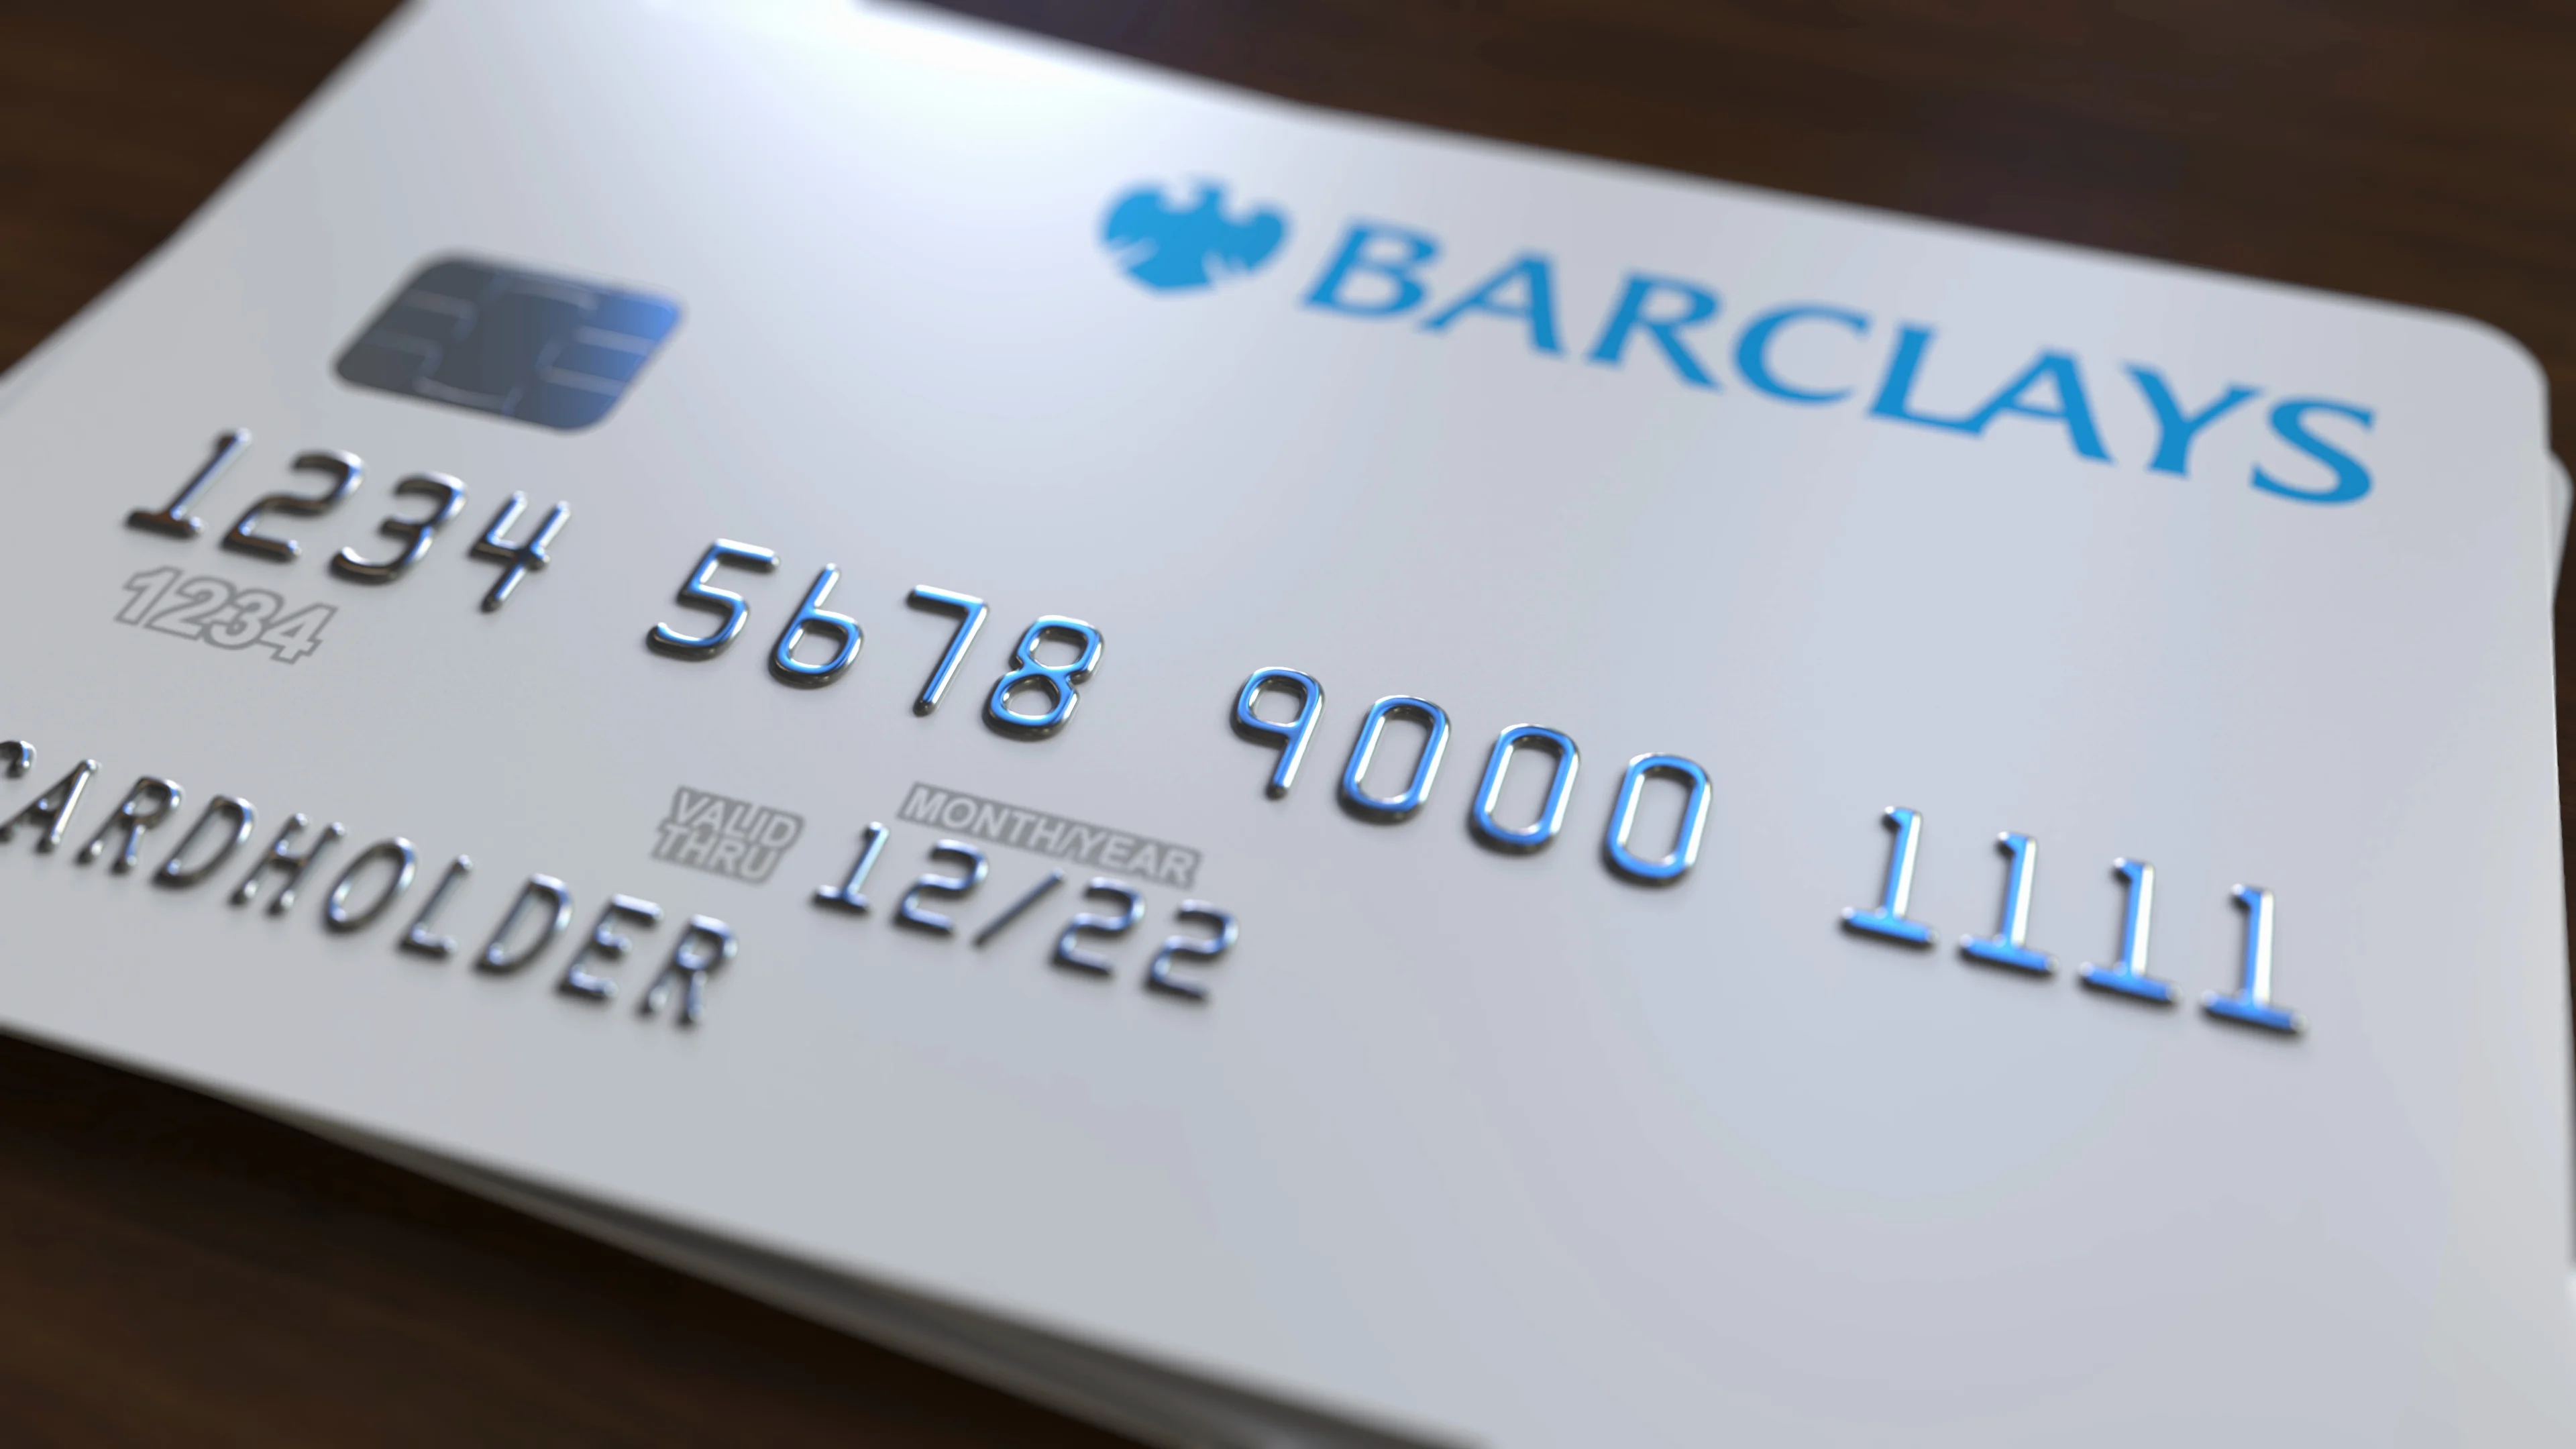 Barclays Debit Card Customer Services